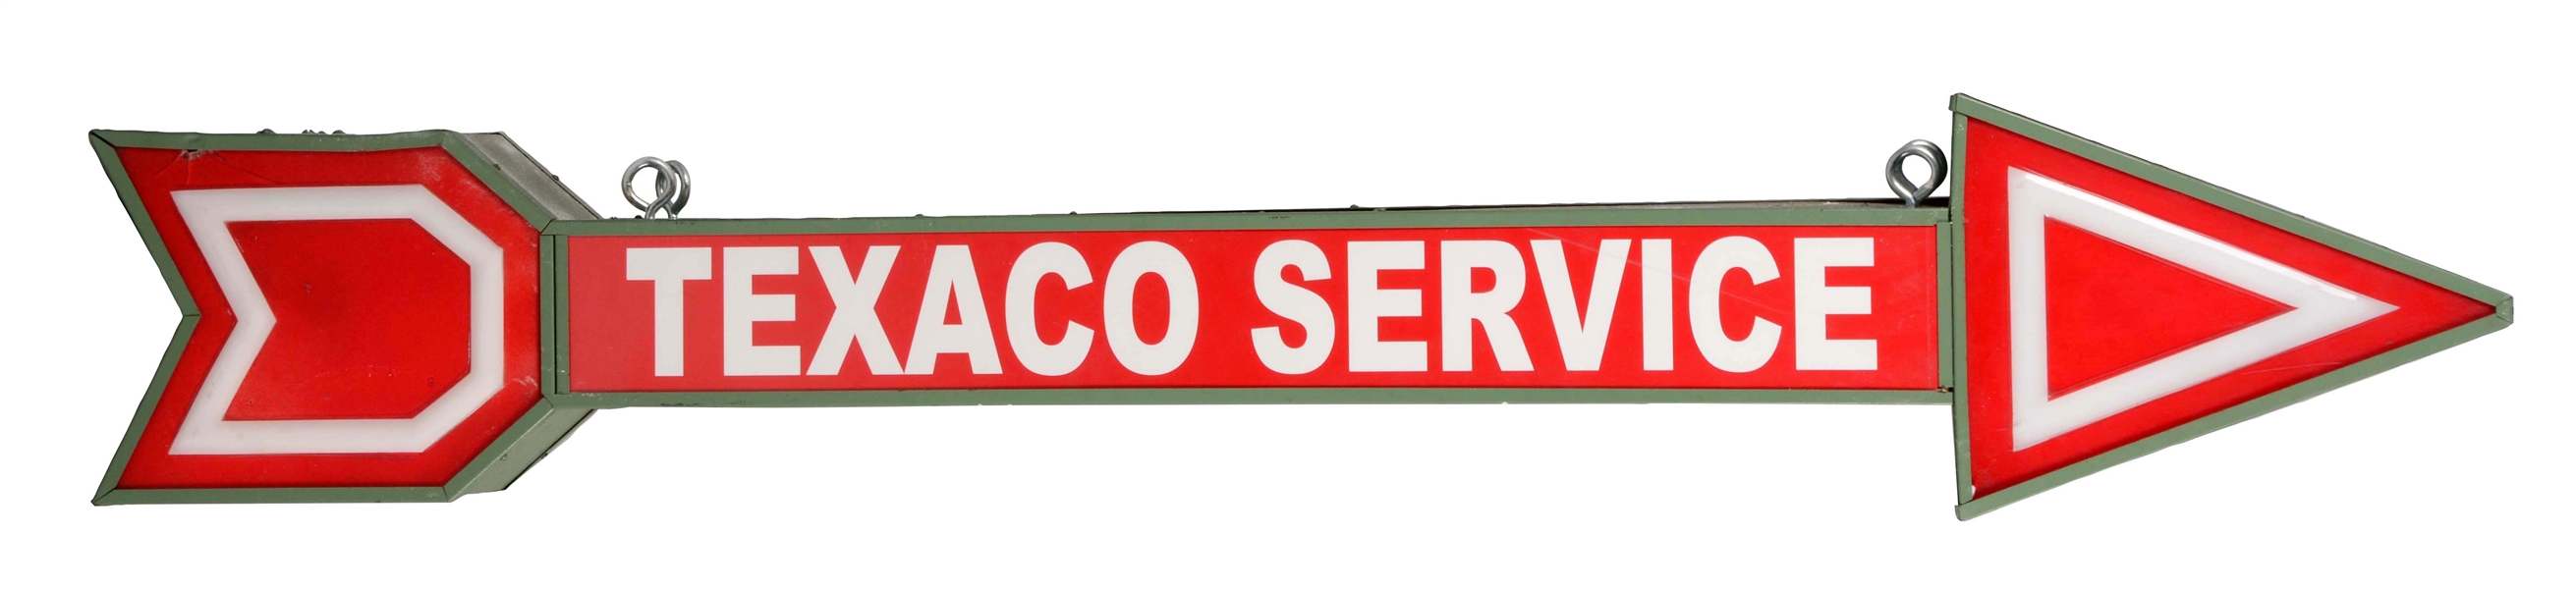 TEXACO SERVICE LIGHT UP ARROW SIGN.